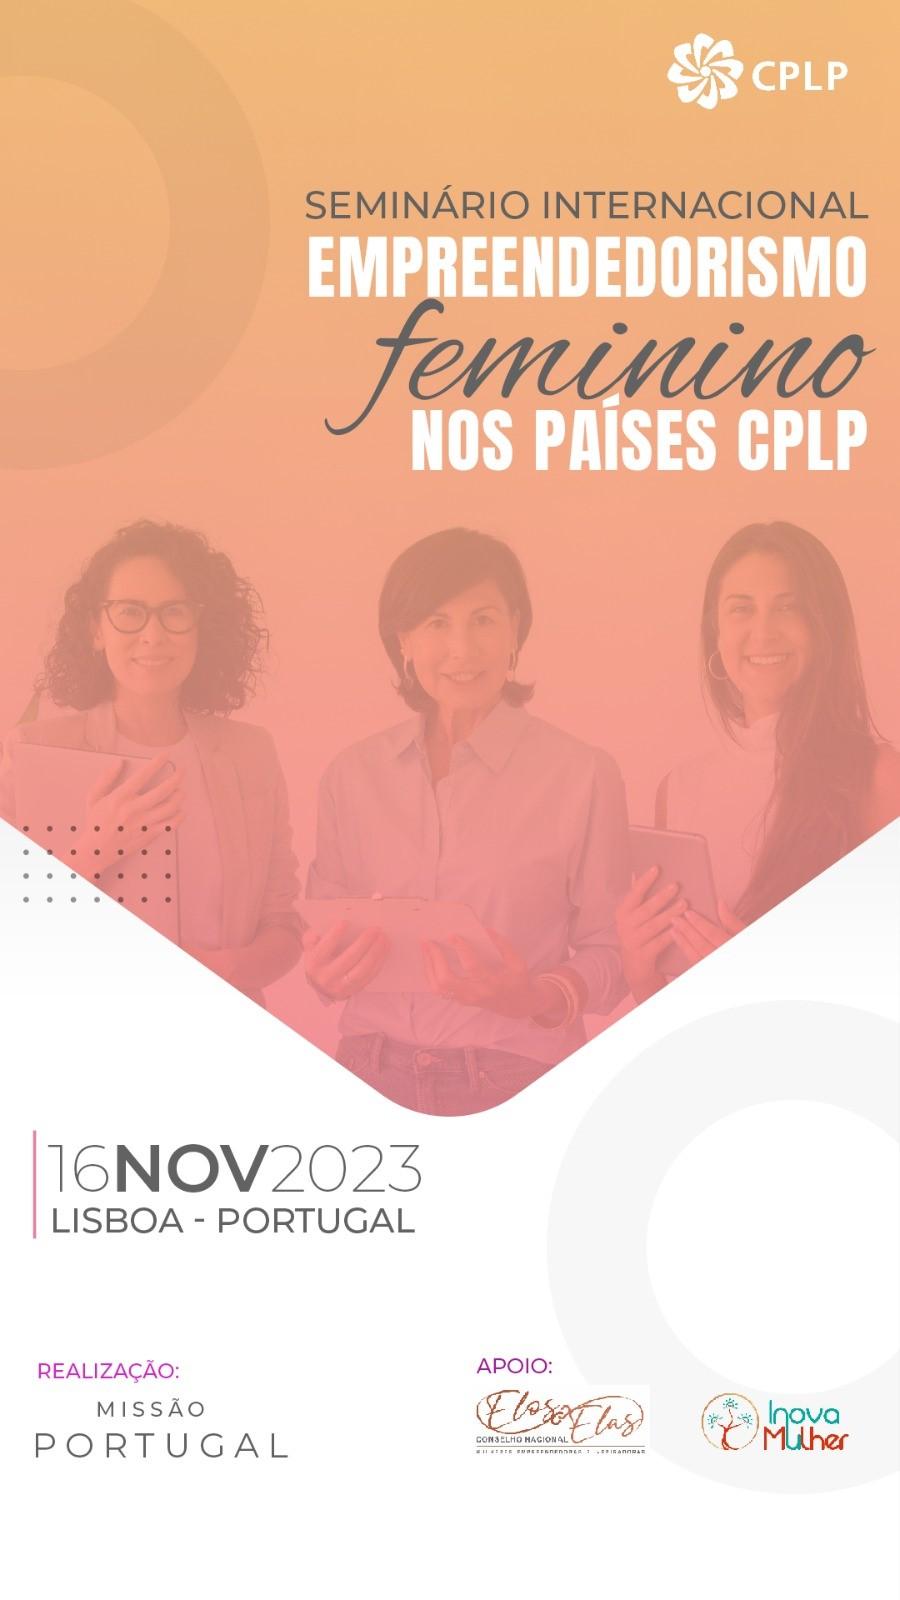 Seminário Internacional Empreendedorismo Feminino nos países CPLP